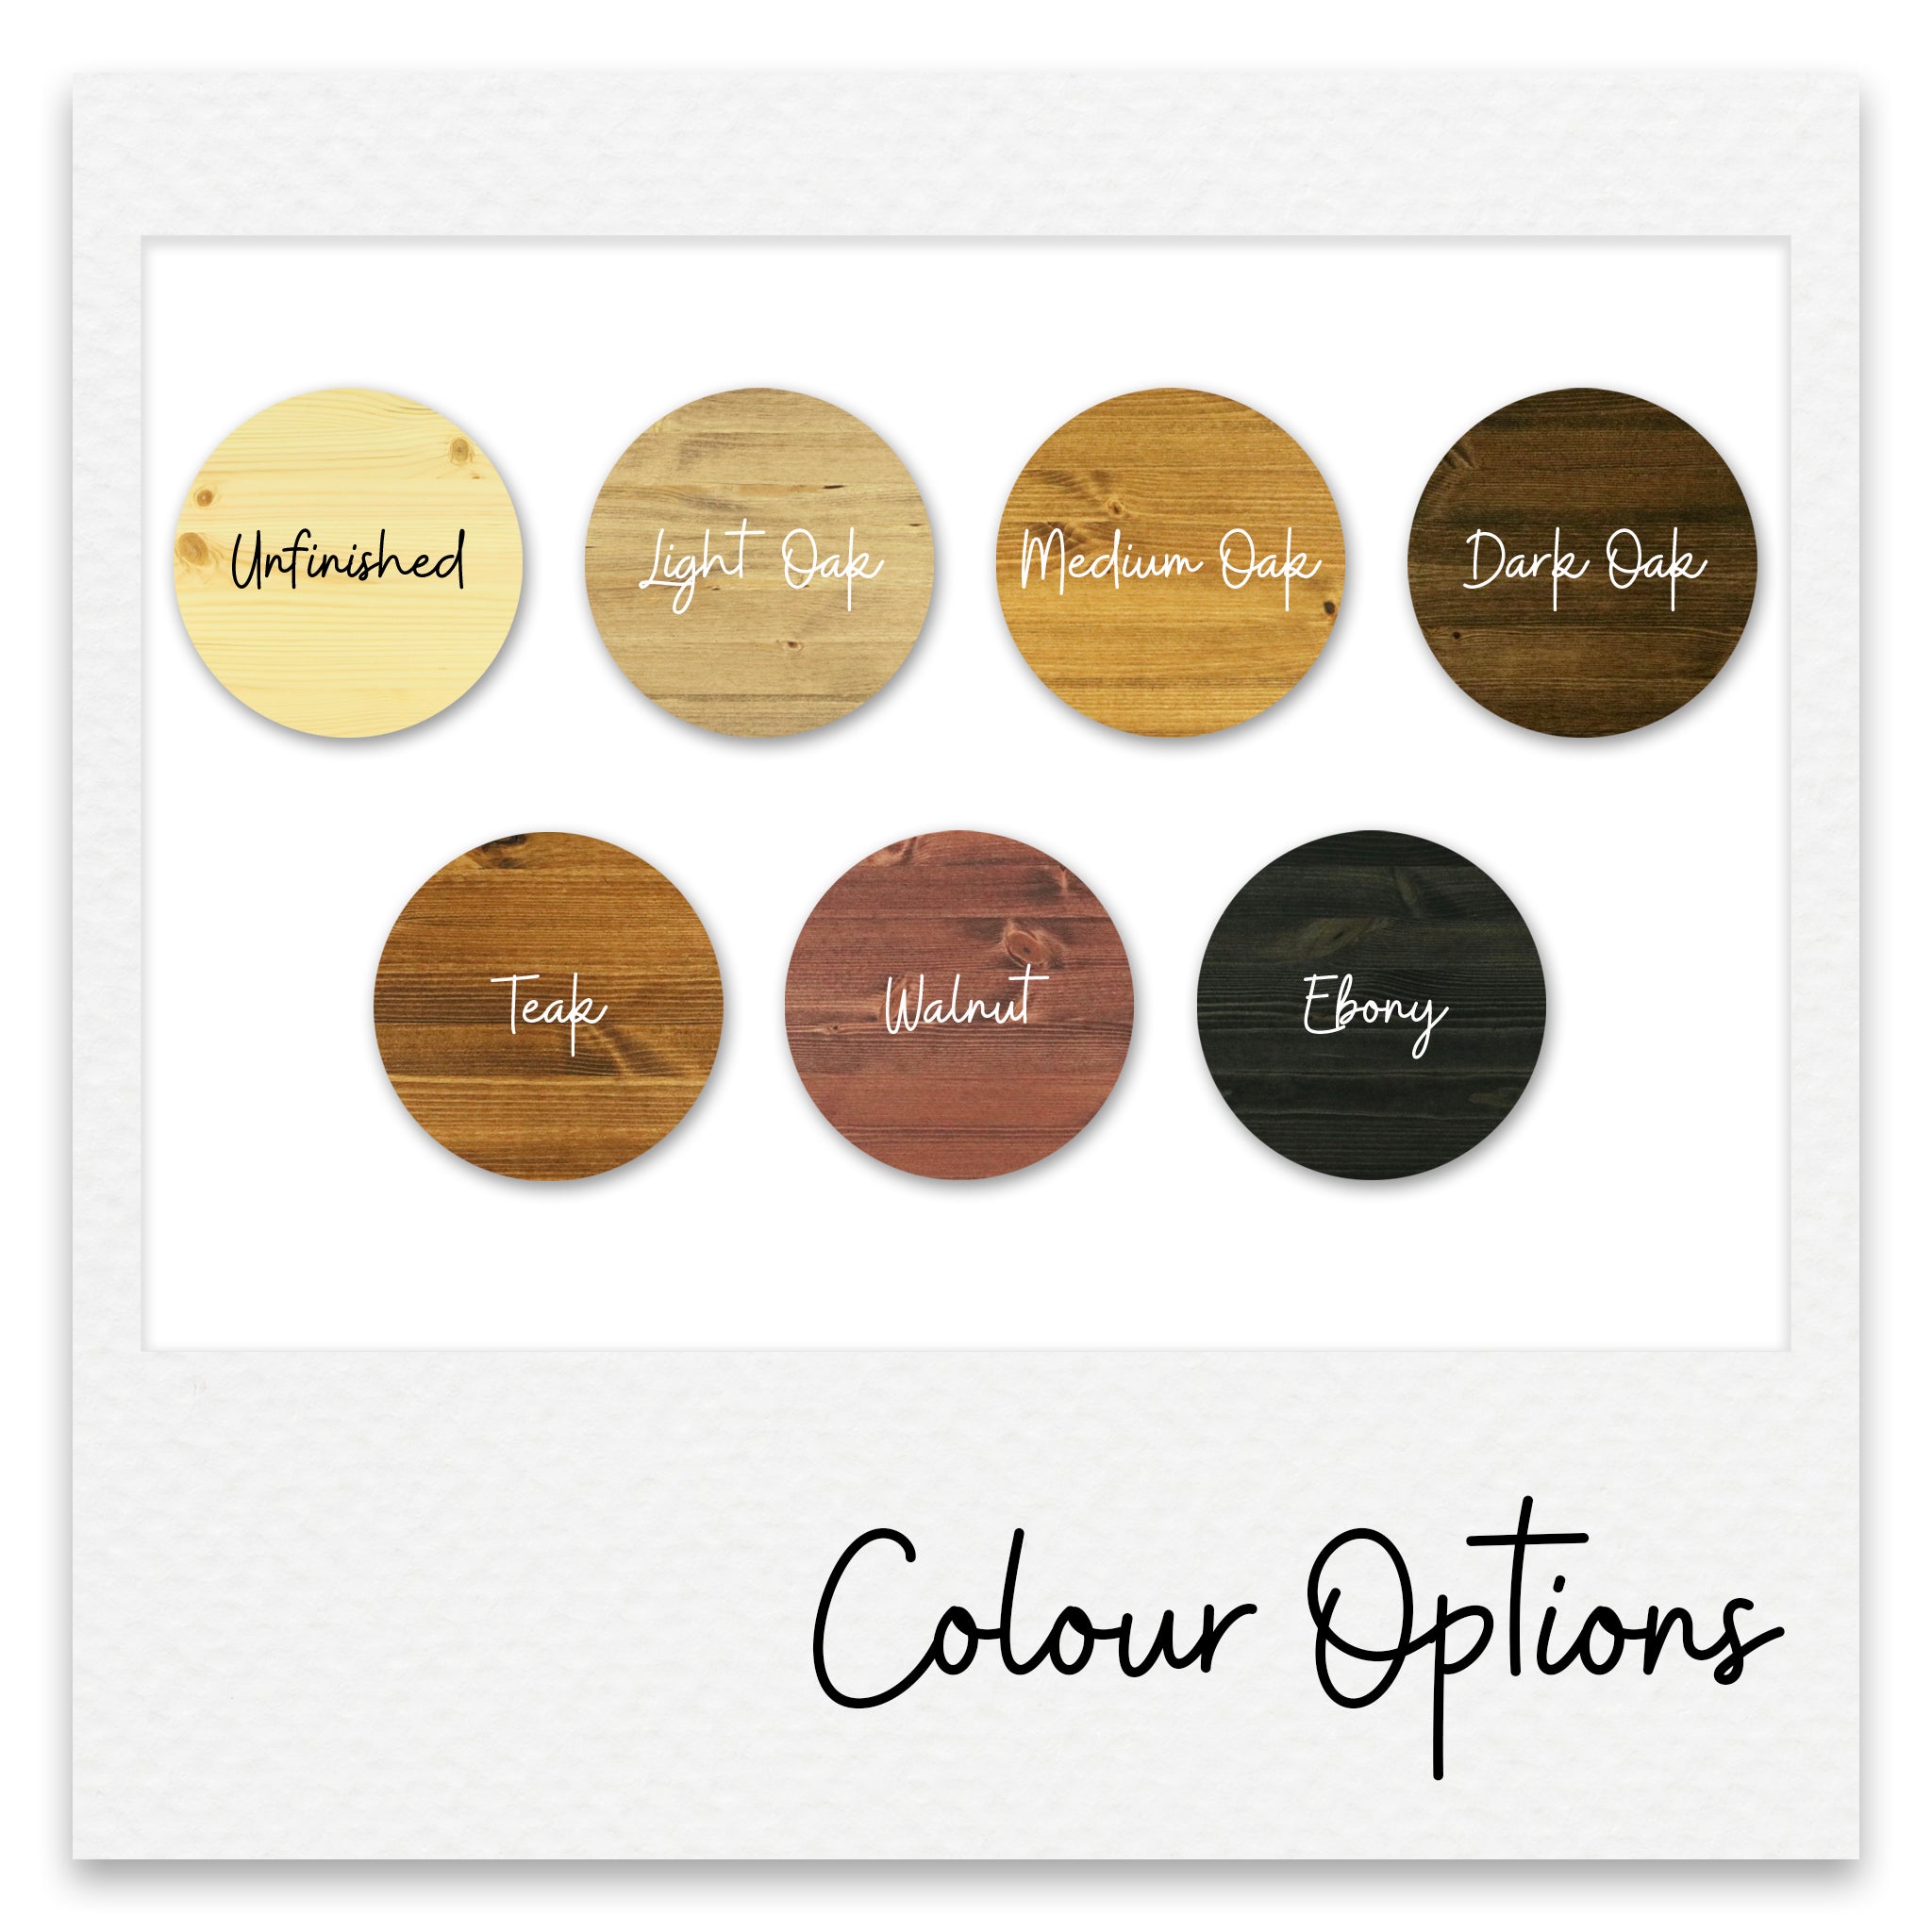 Clara - Coffee Table - Colour Samples